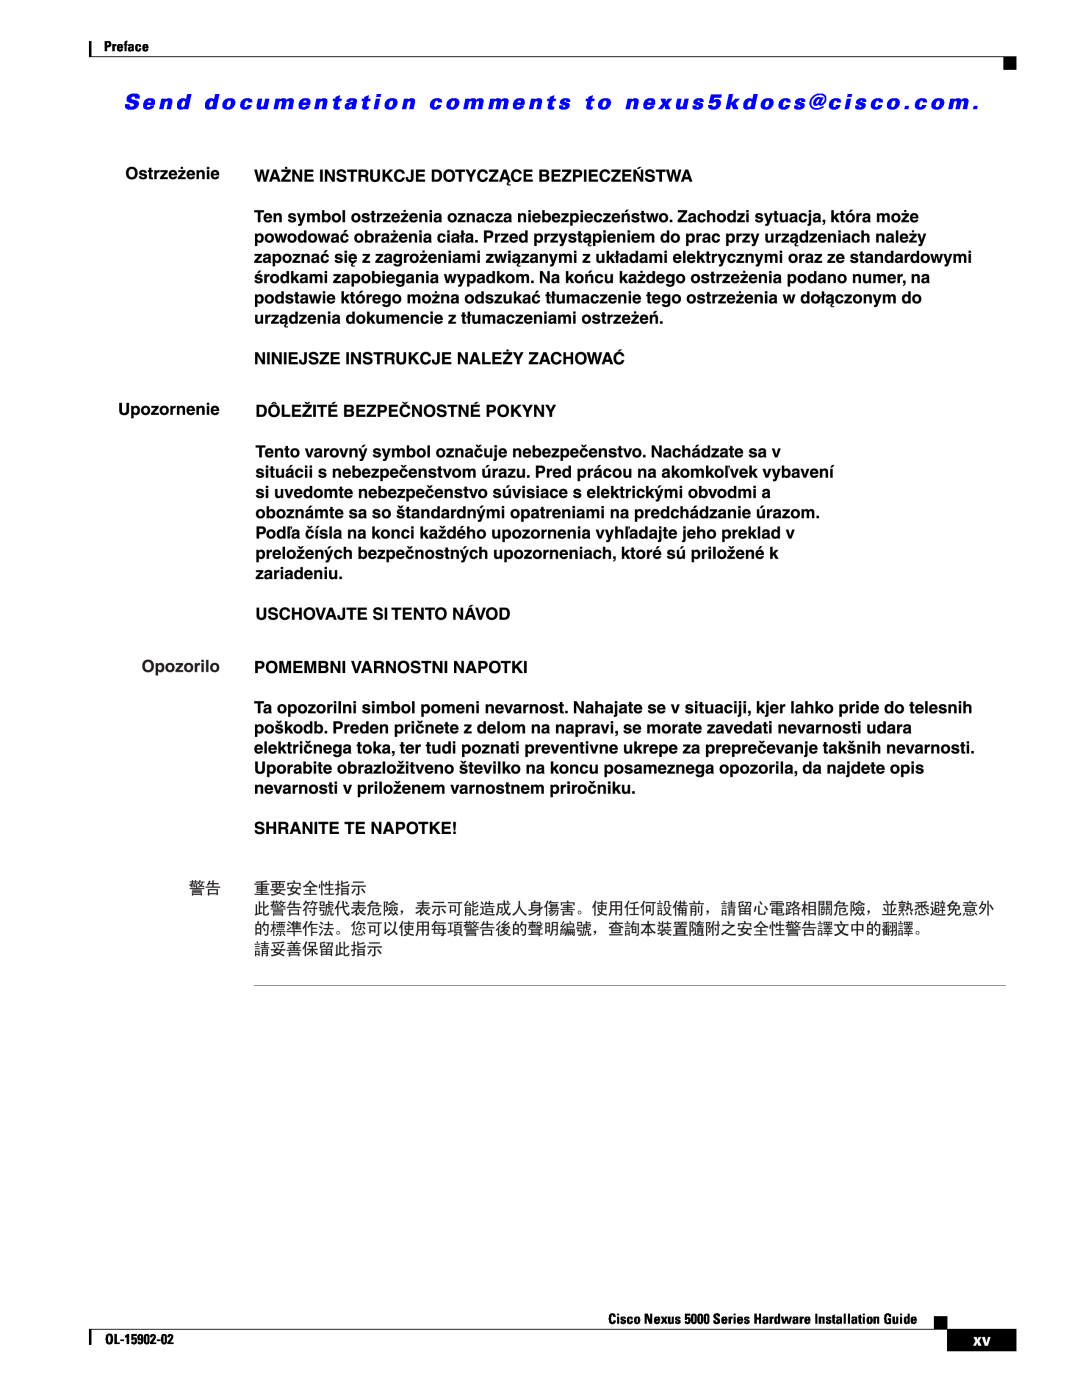 Cisco Systems manual Preface, Cisco Nexus 5000 Series Hardware Installation Guide, OL-15902-02 